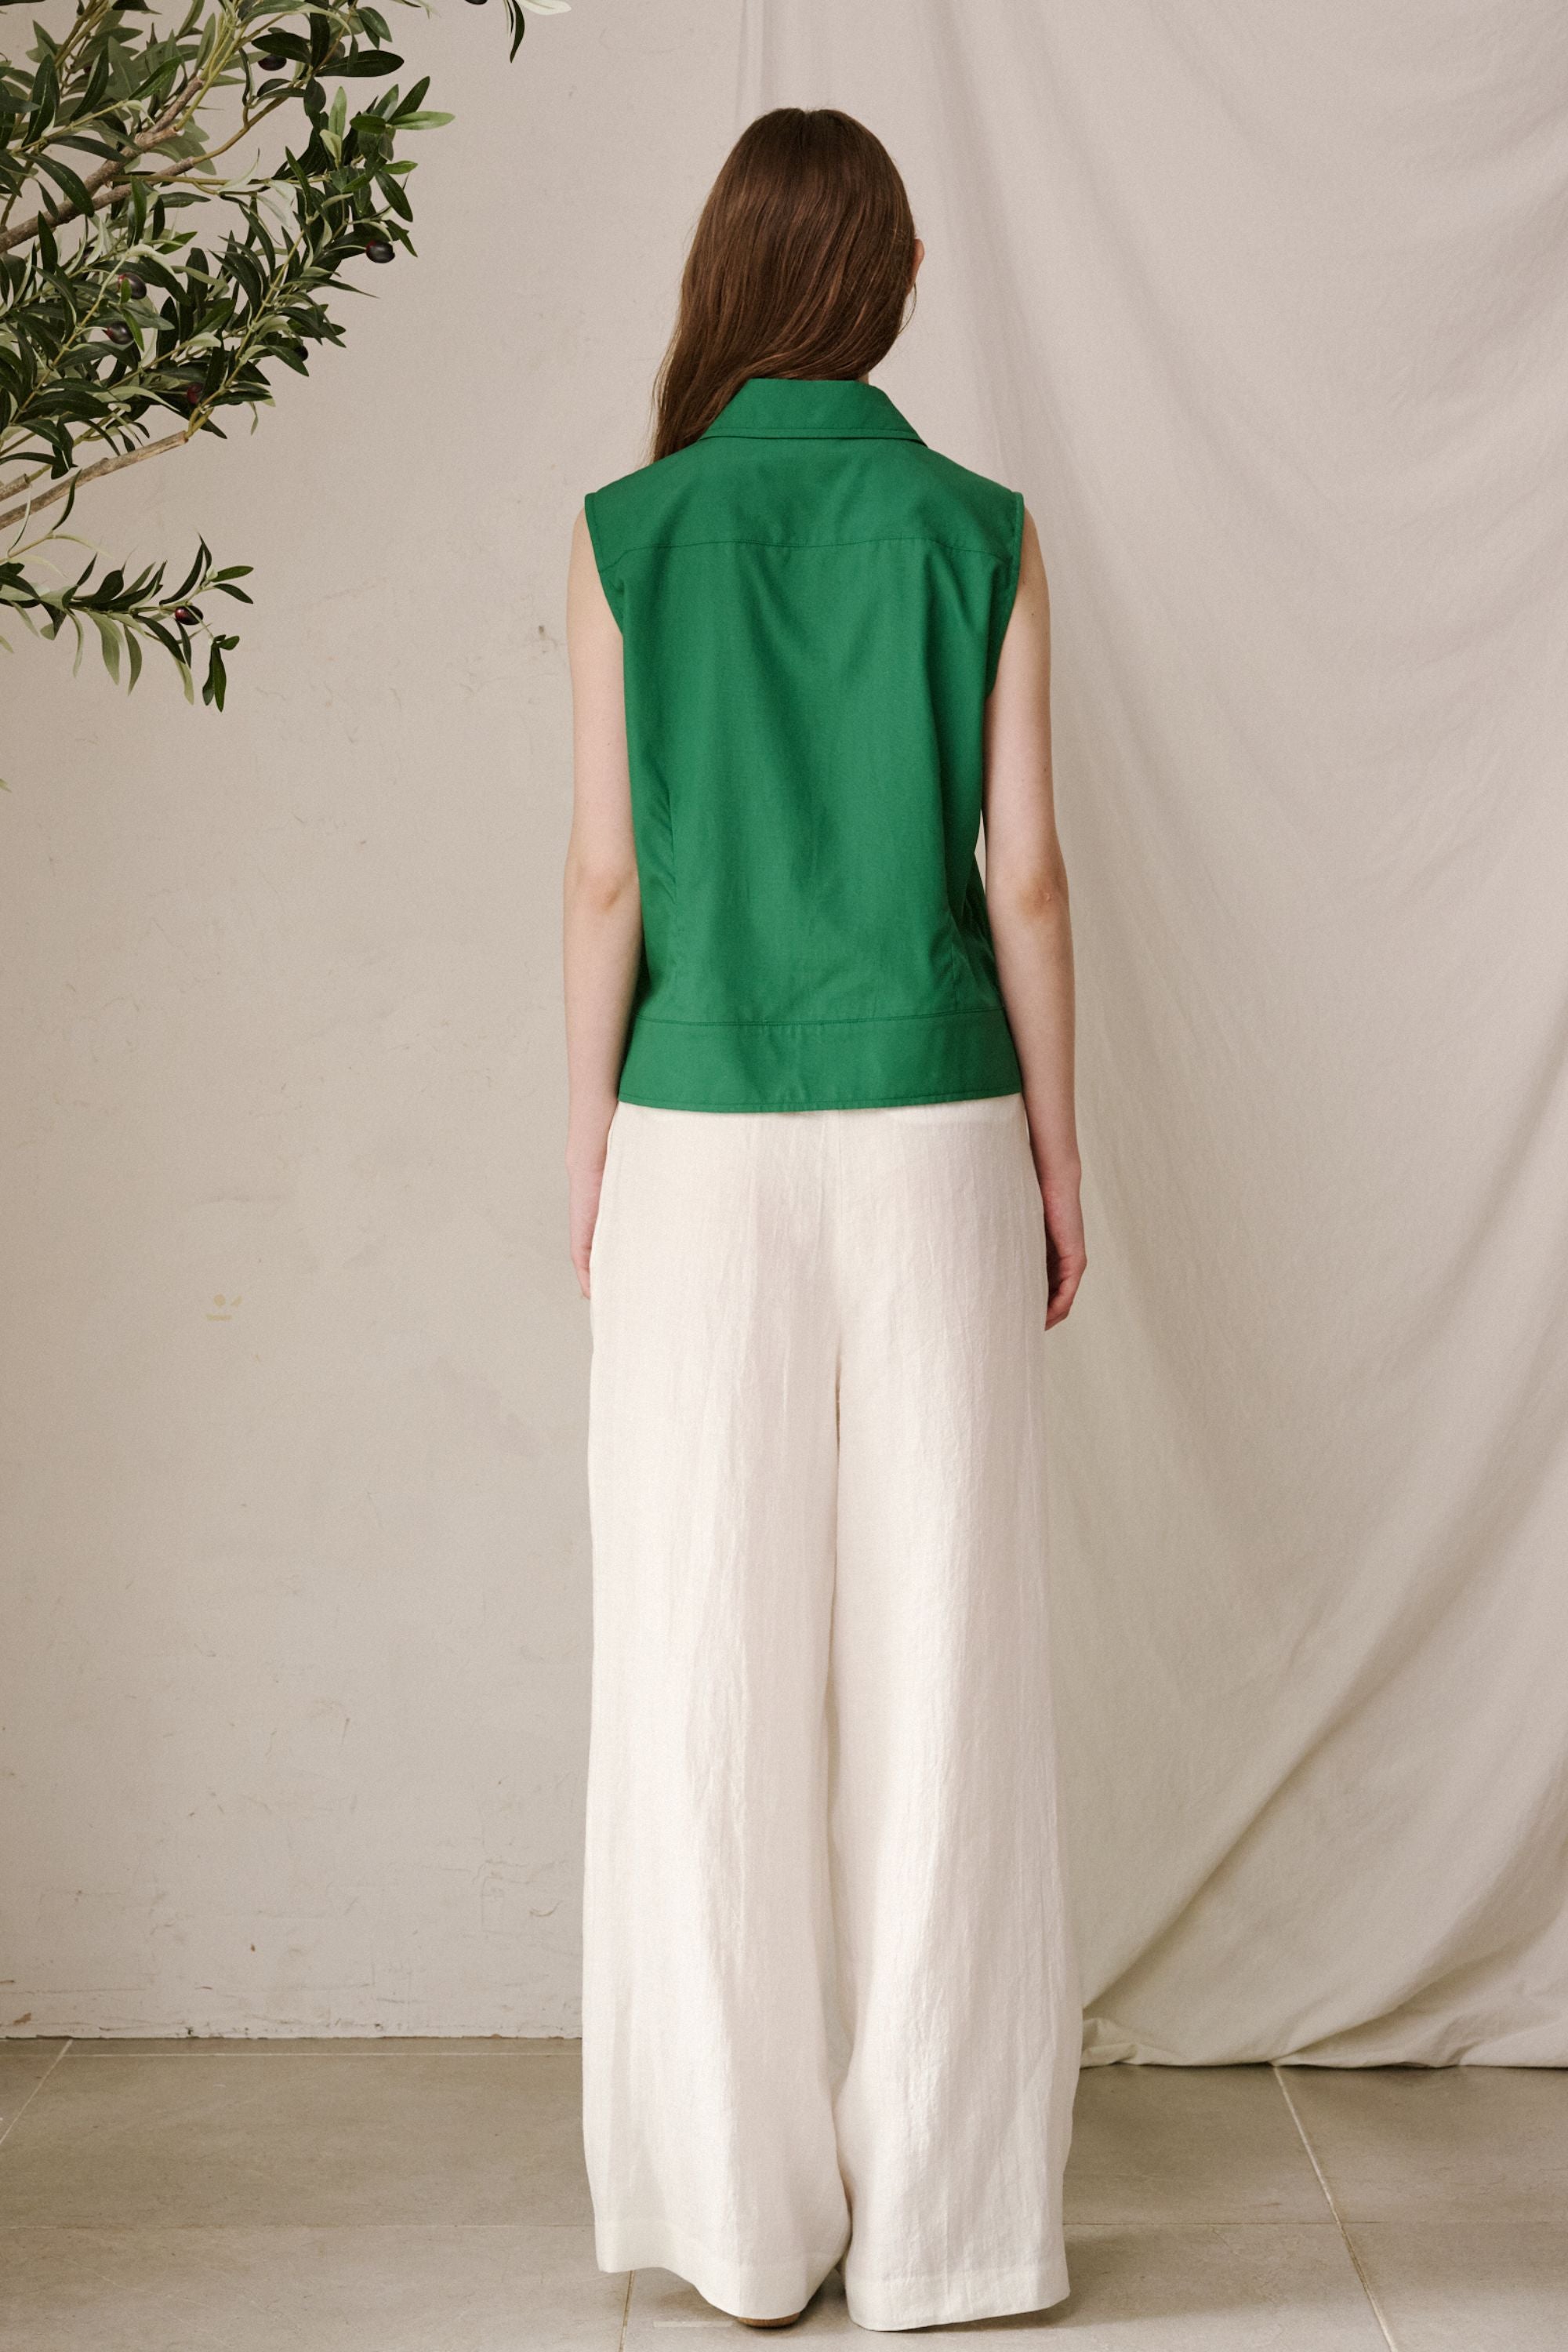 GREENEST - Sleeveless Shirt | Green, buy at DOORS NYC